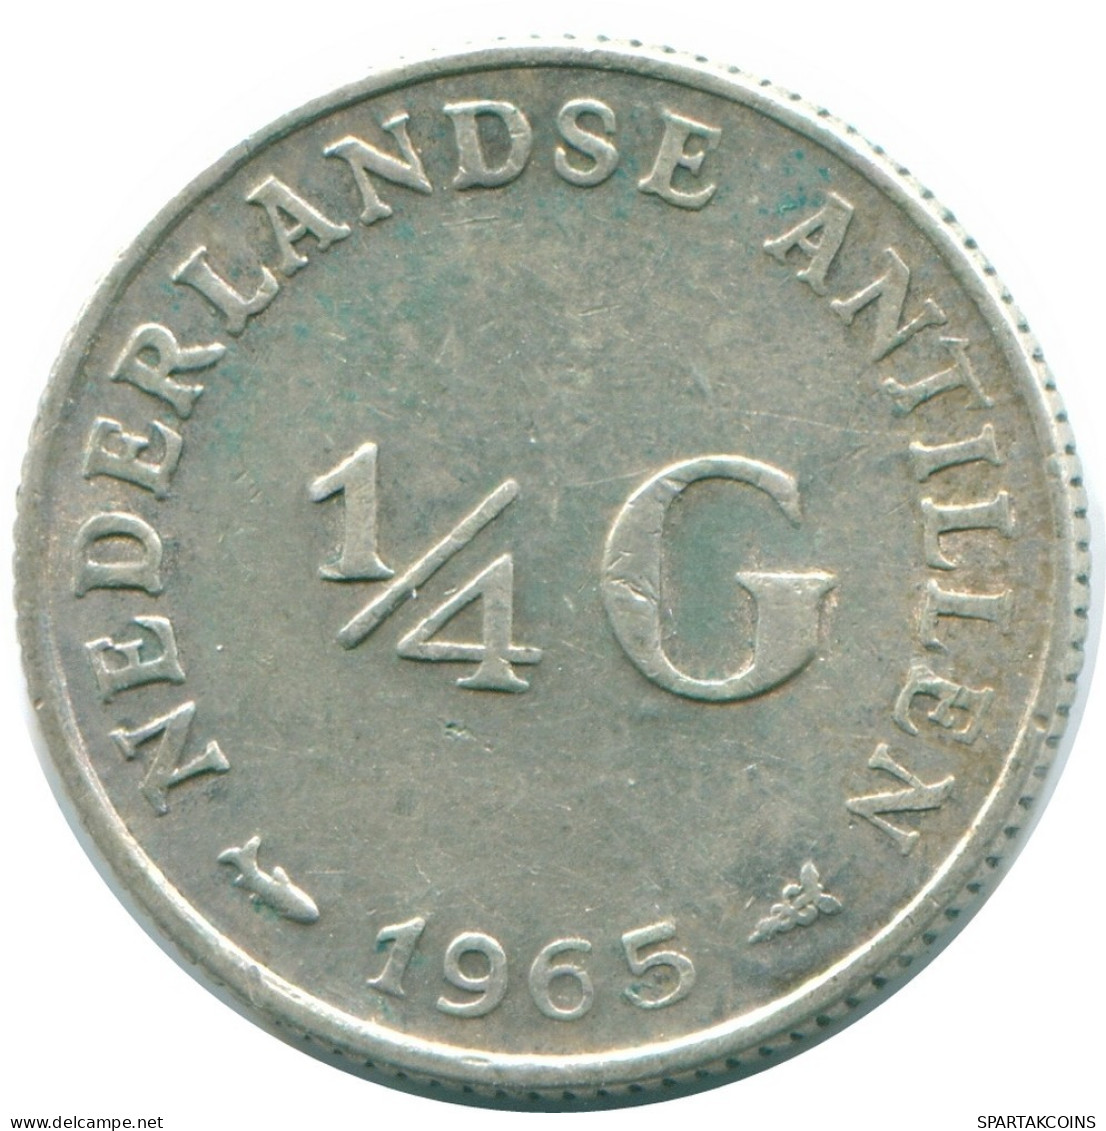 1/4 GULDEN 1965 NETHERLANDS ANTILLES SILVER Colonial Coin #NL11279.4.U.A - Niederländische Antillen